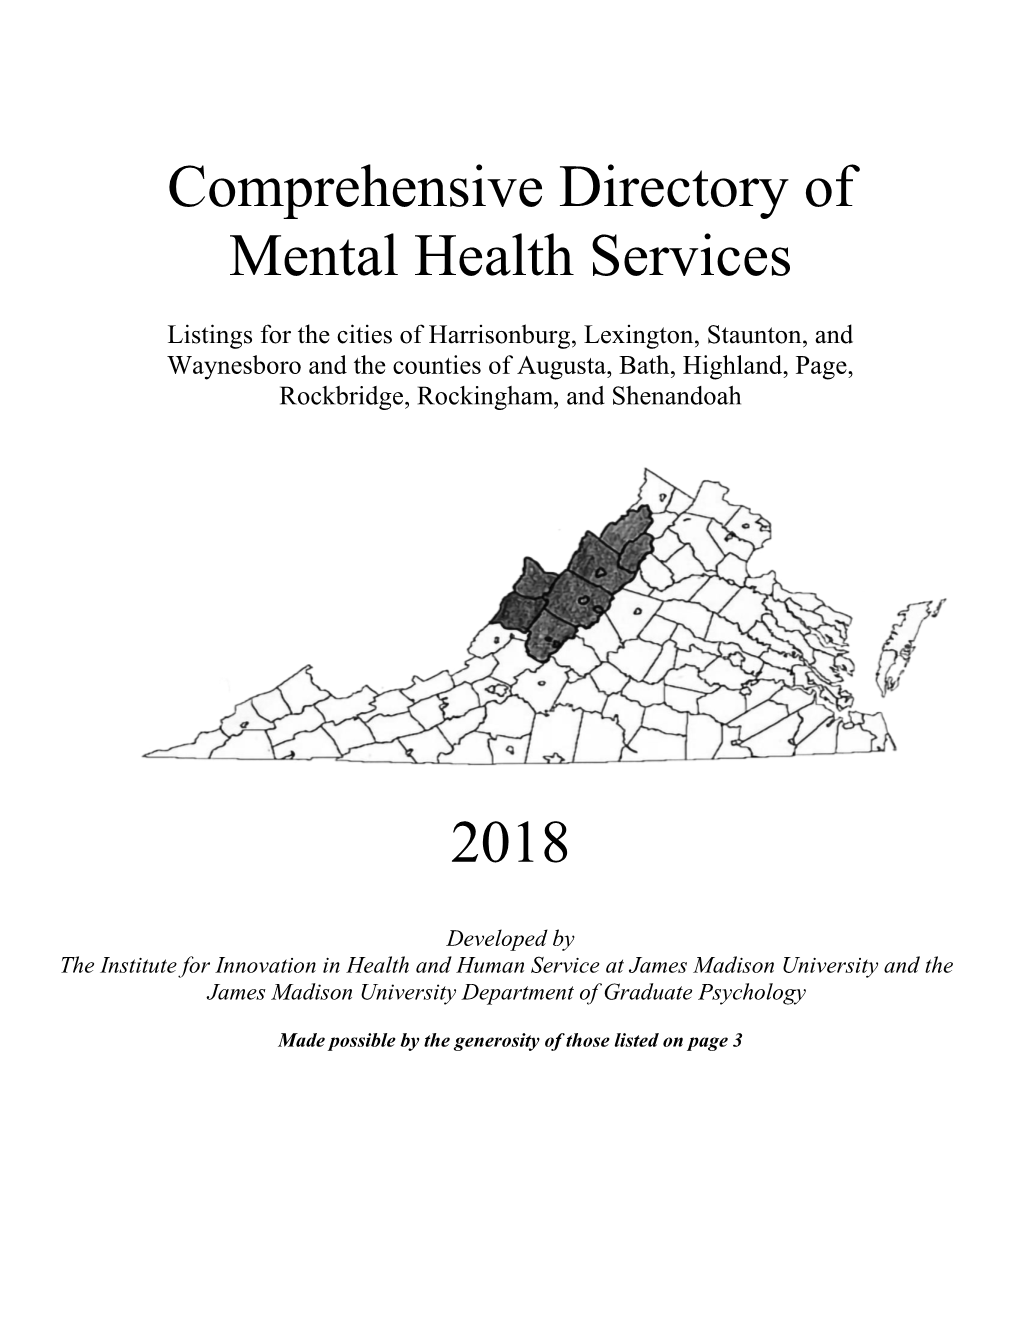 Shenandoah Valley Mental Health Services Directory, 2018